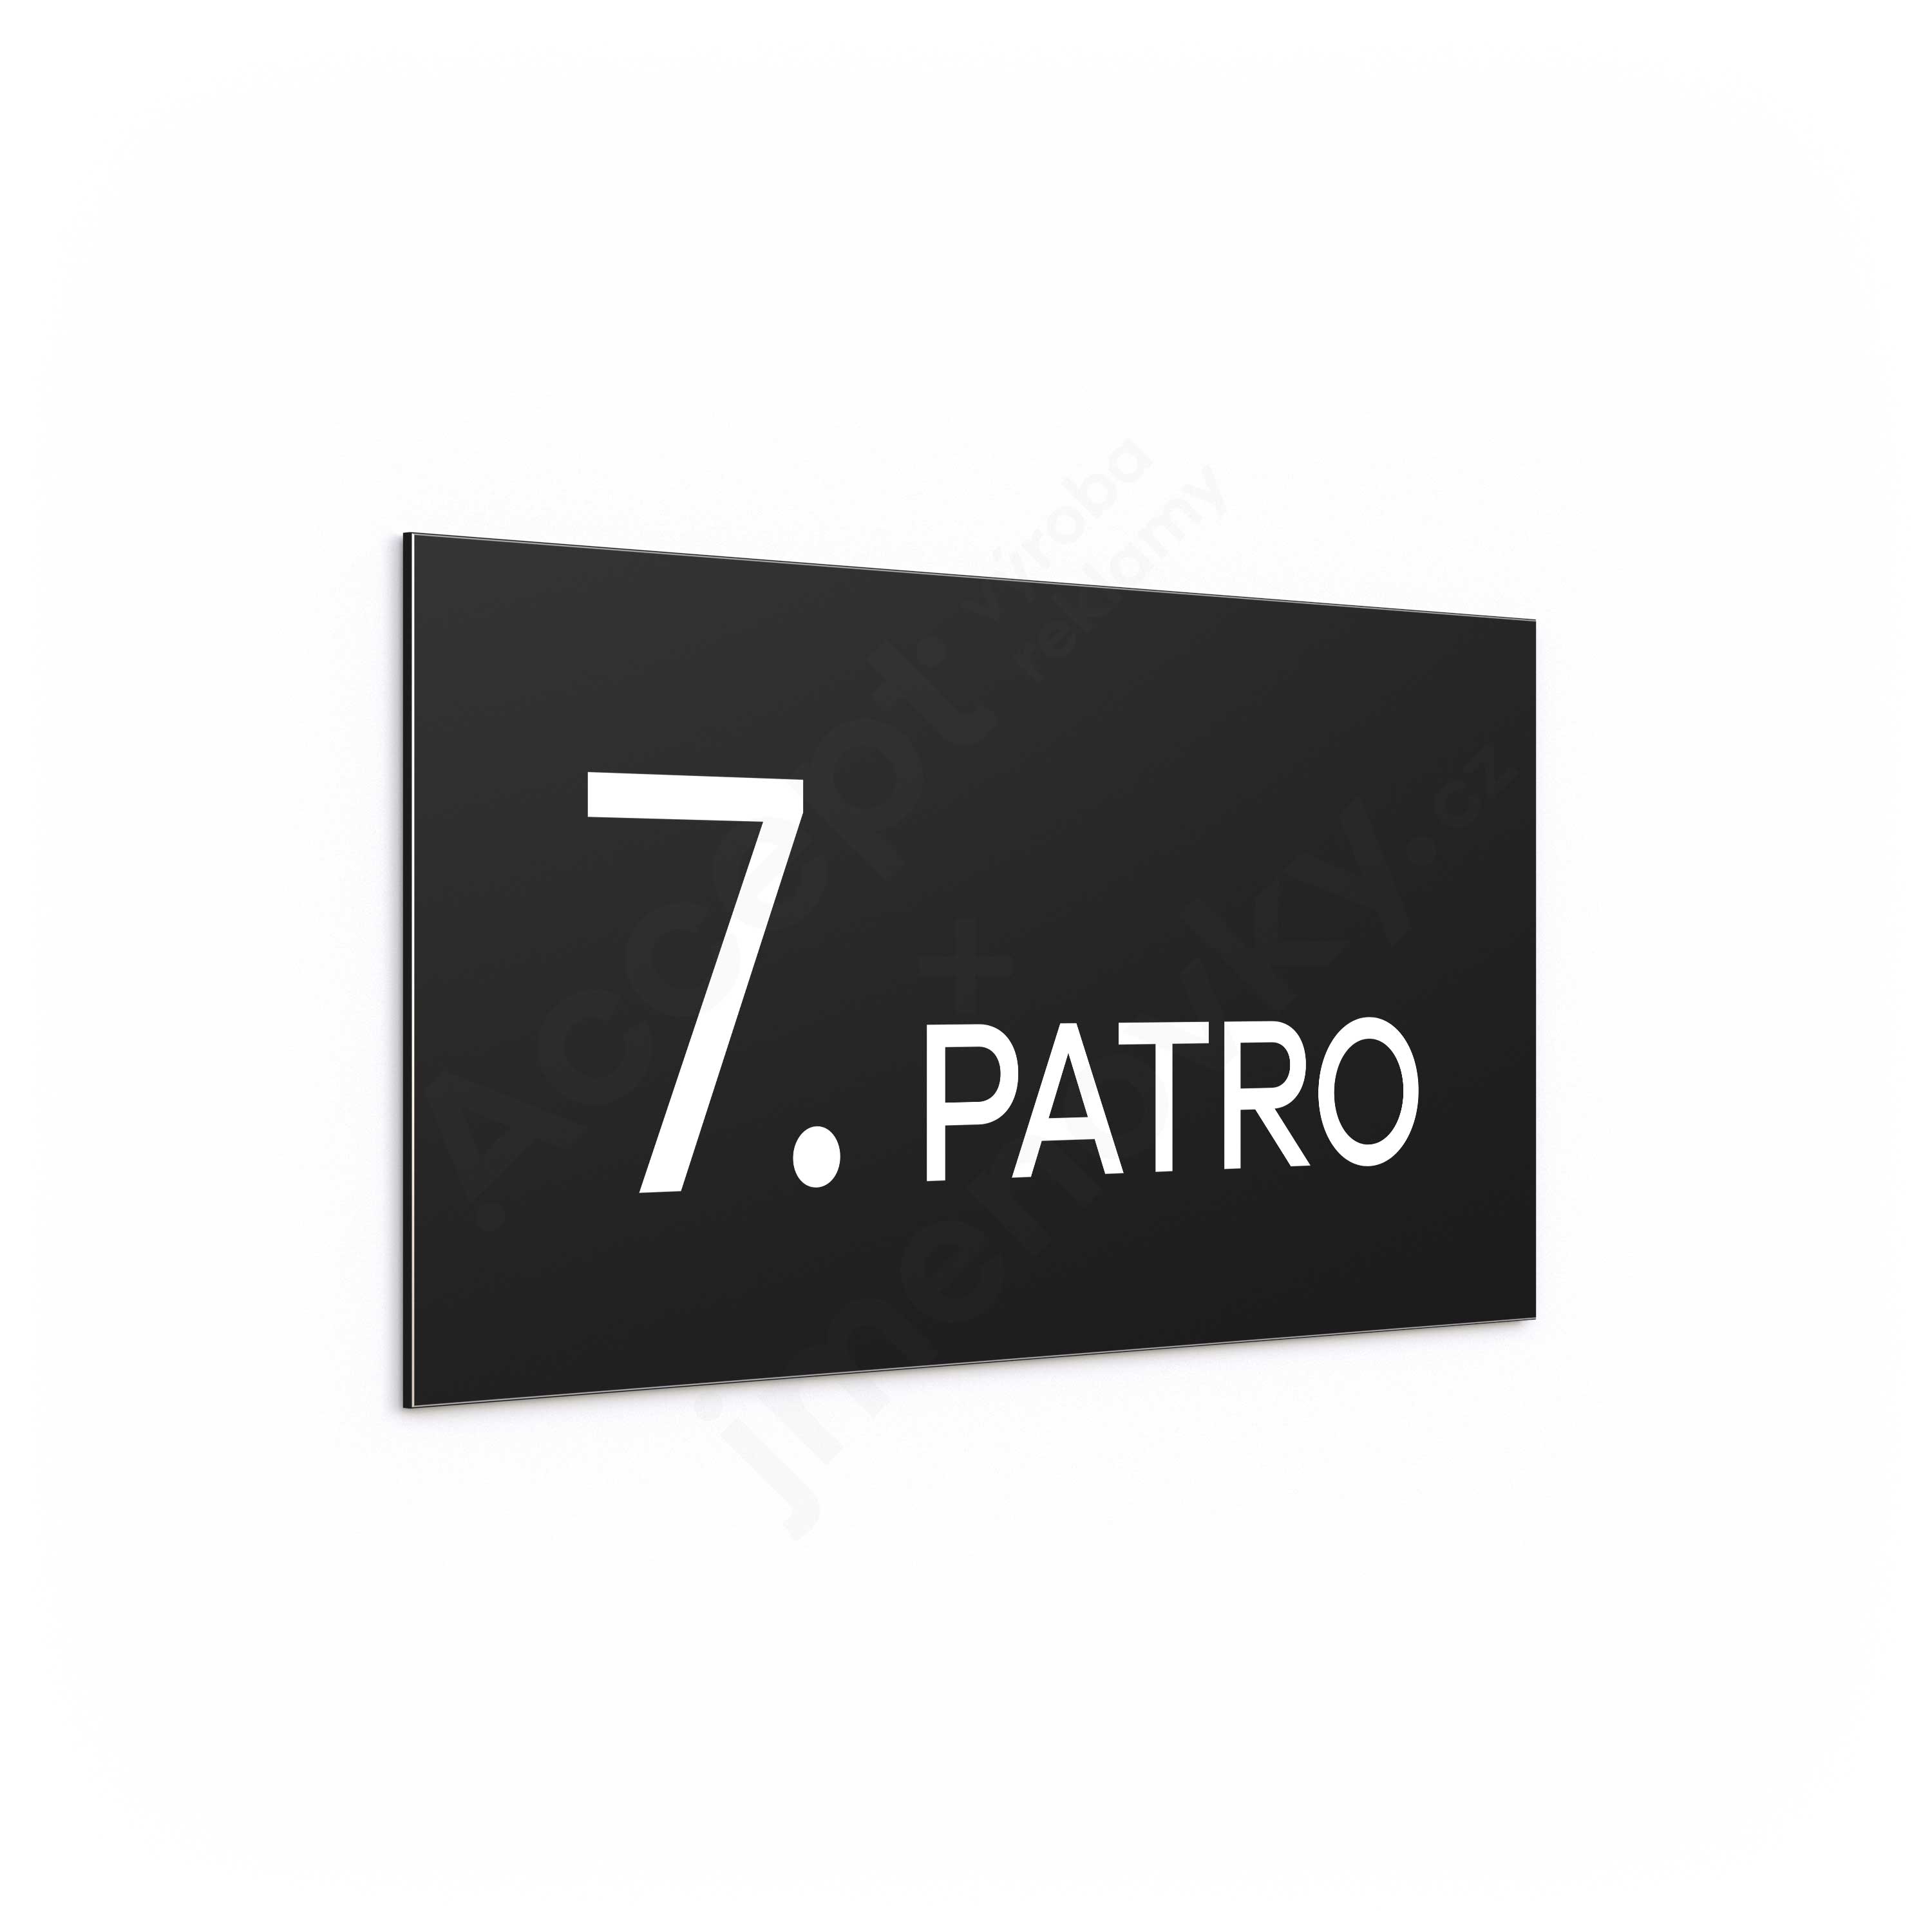 Označení podlaží "7. PATRO" - černá tabulka - bílý popis